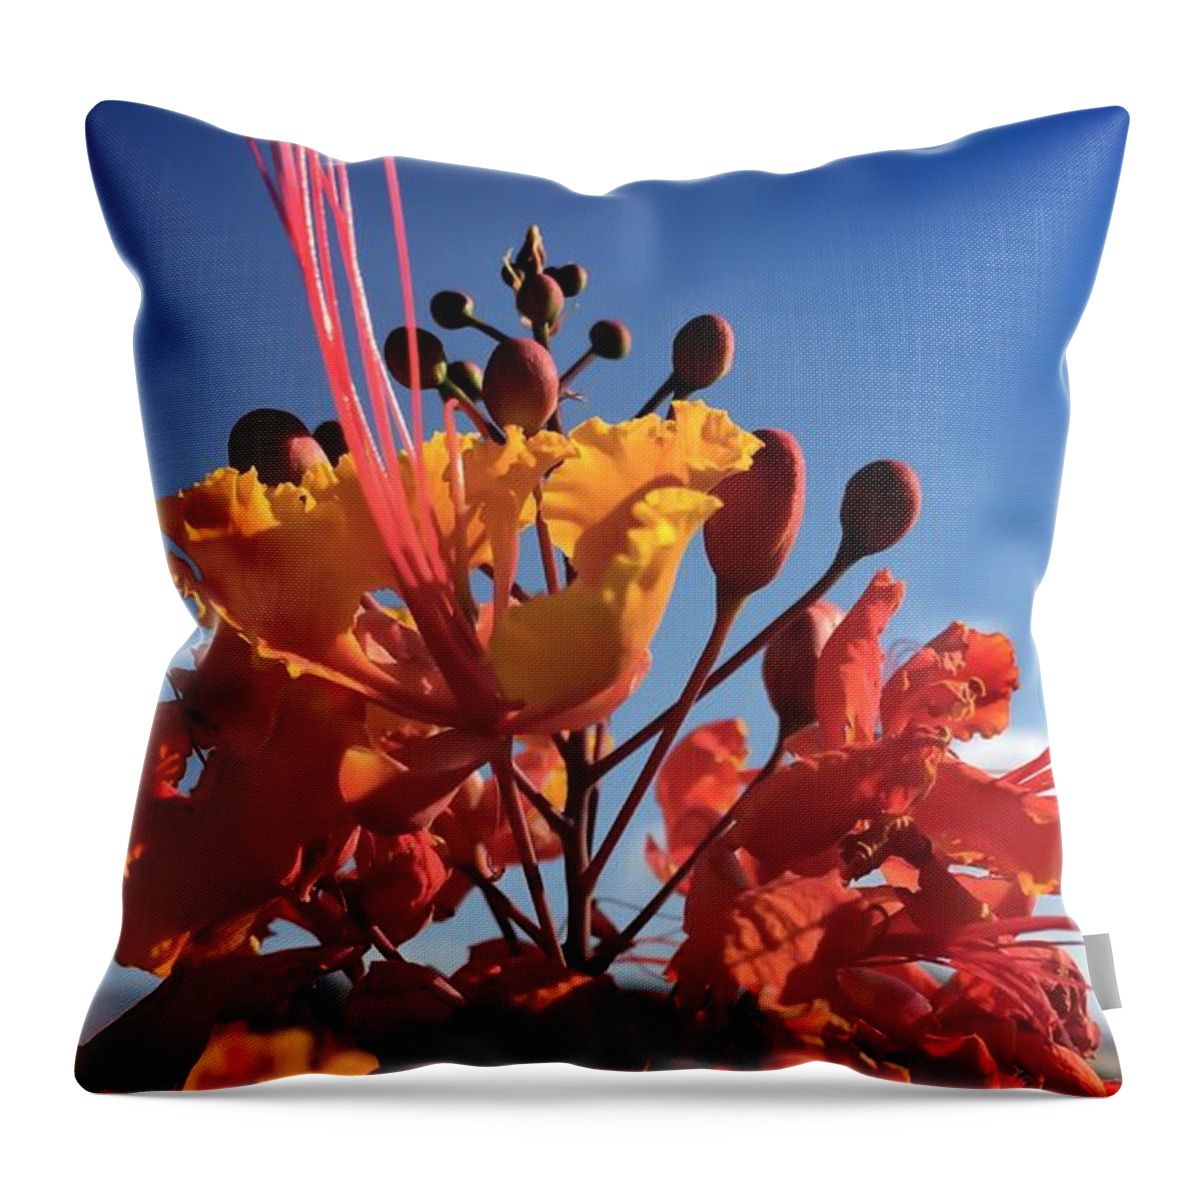 Flower Throw Pillow featuring the photograph Caesalpinia Bird of Paradise by Chris Tarpening